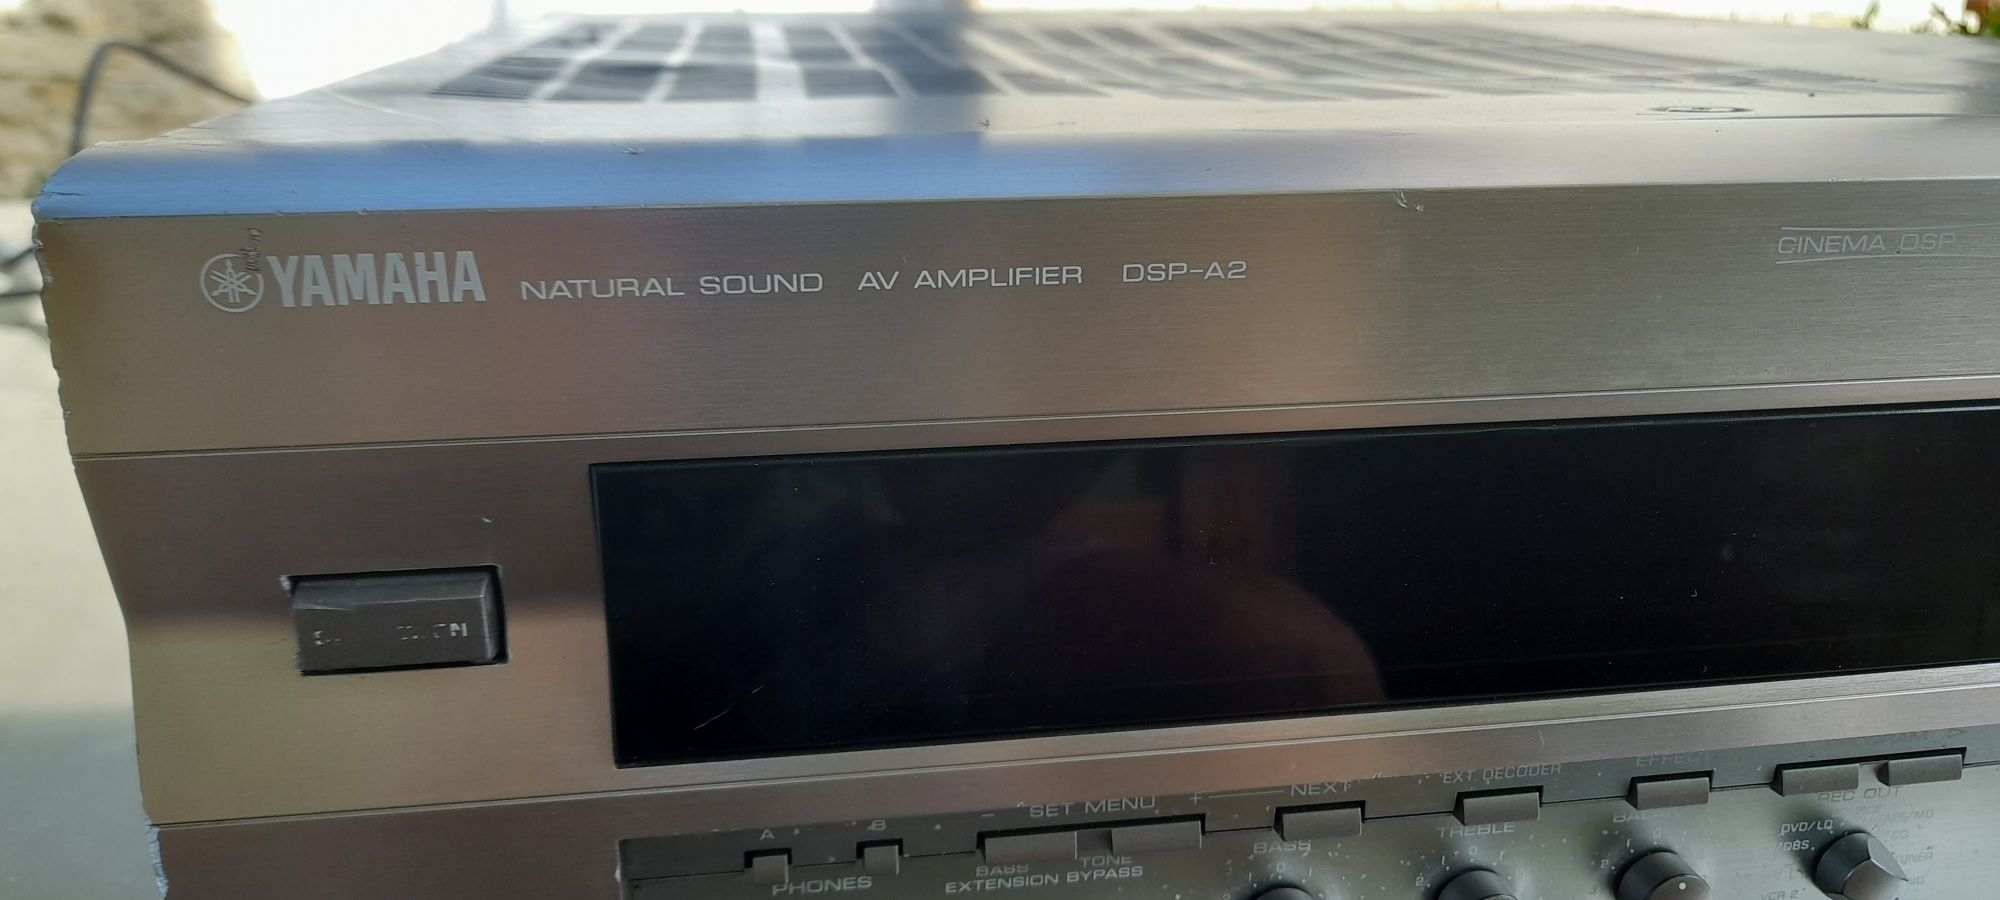 Amplificator Yamaha dsp-a2